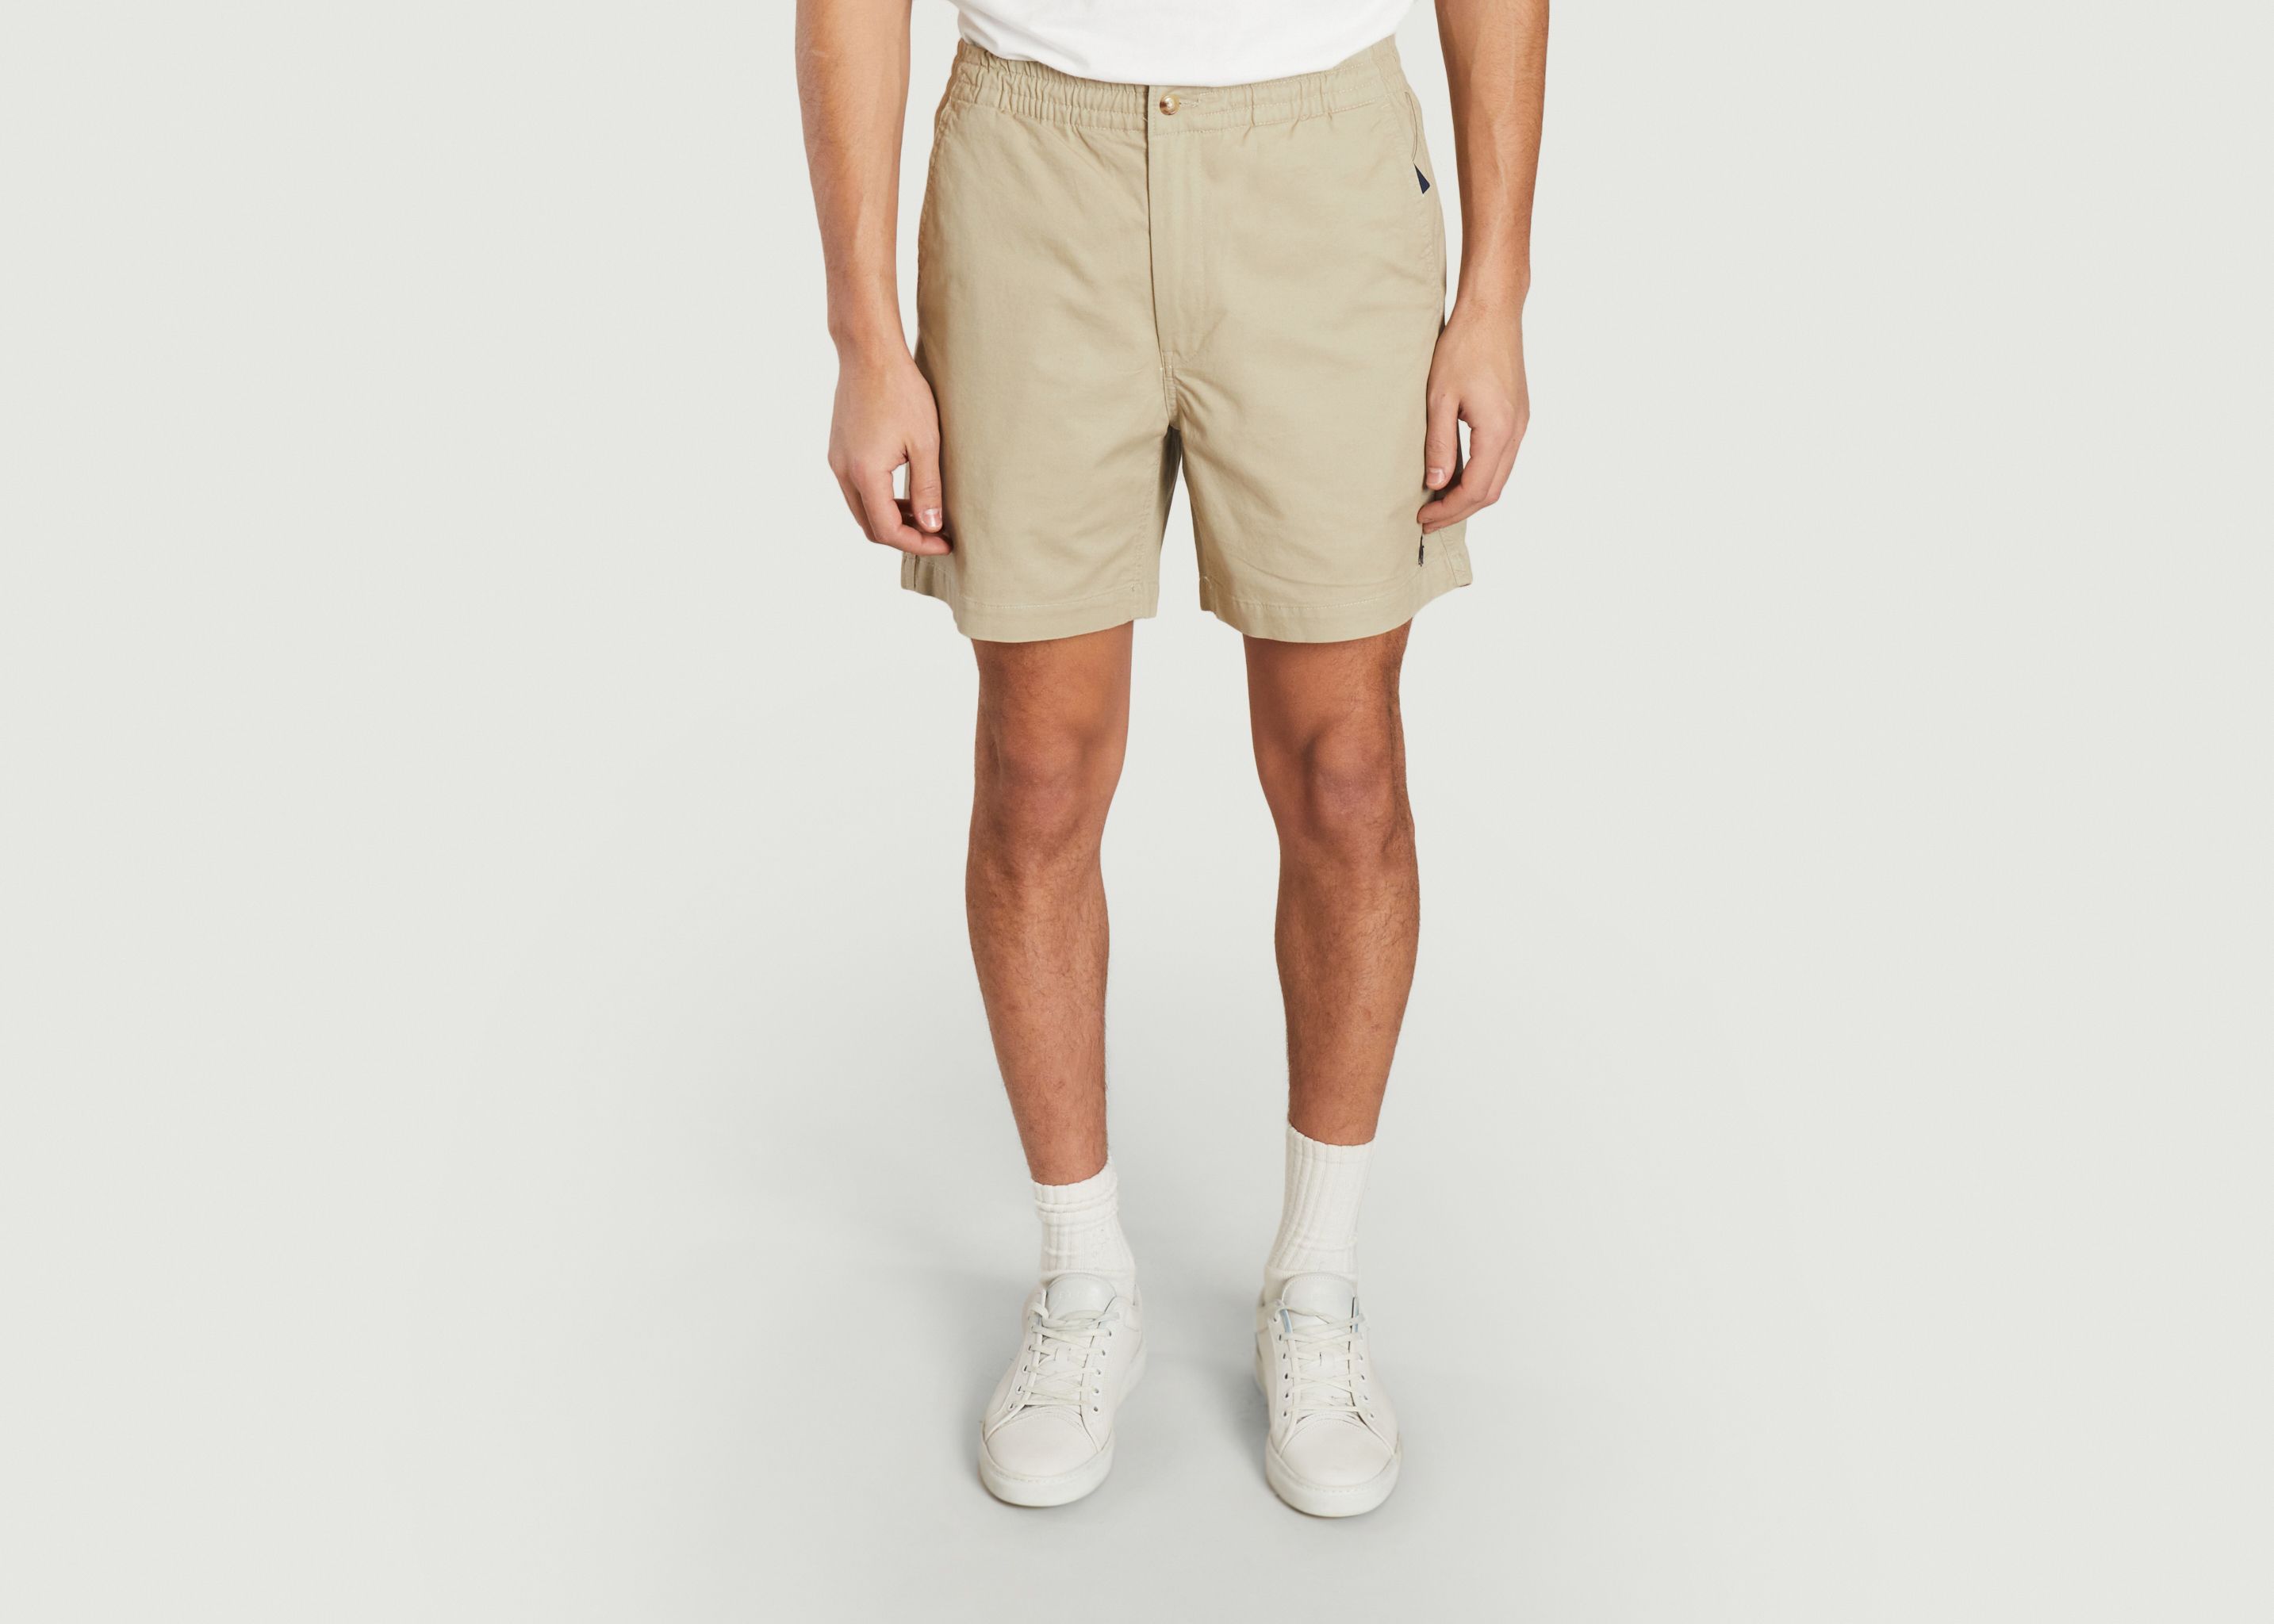 Cotton shorts - Polo Ralph Lauren